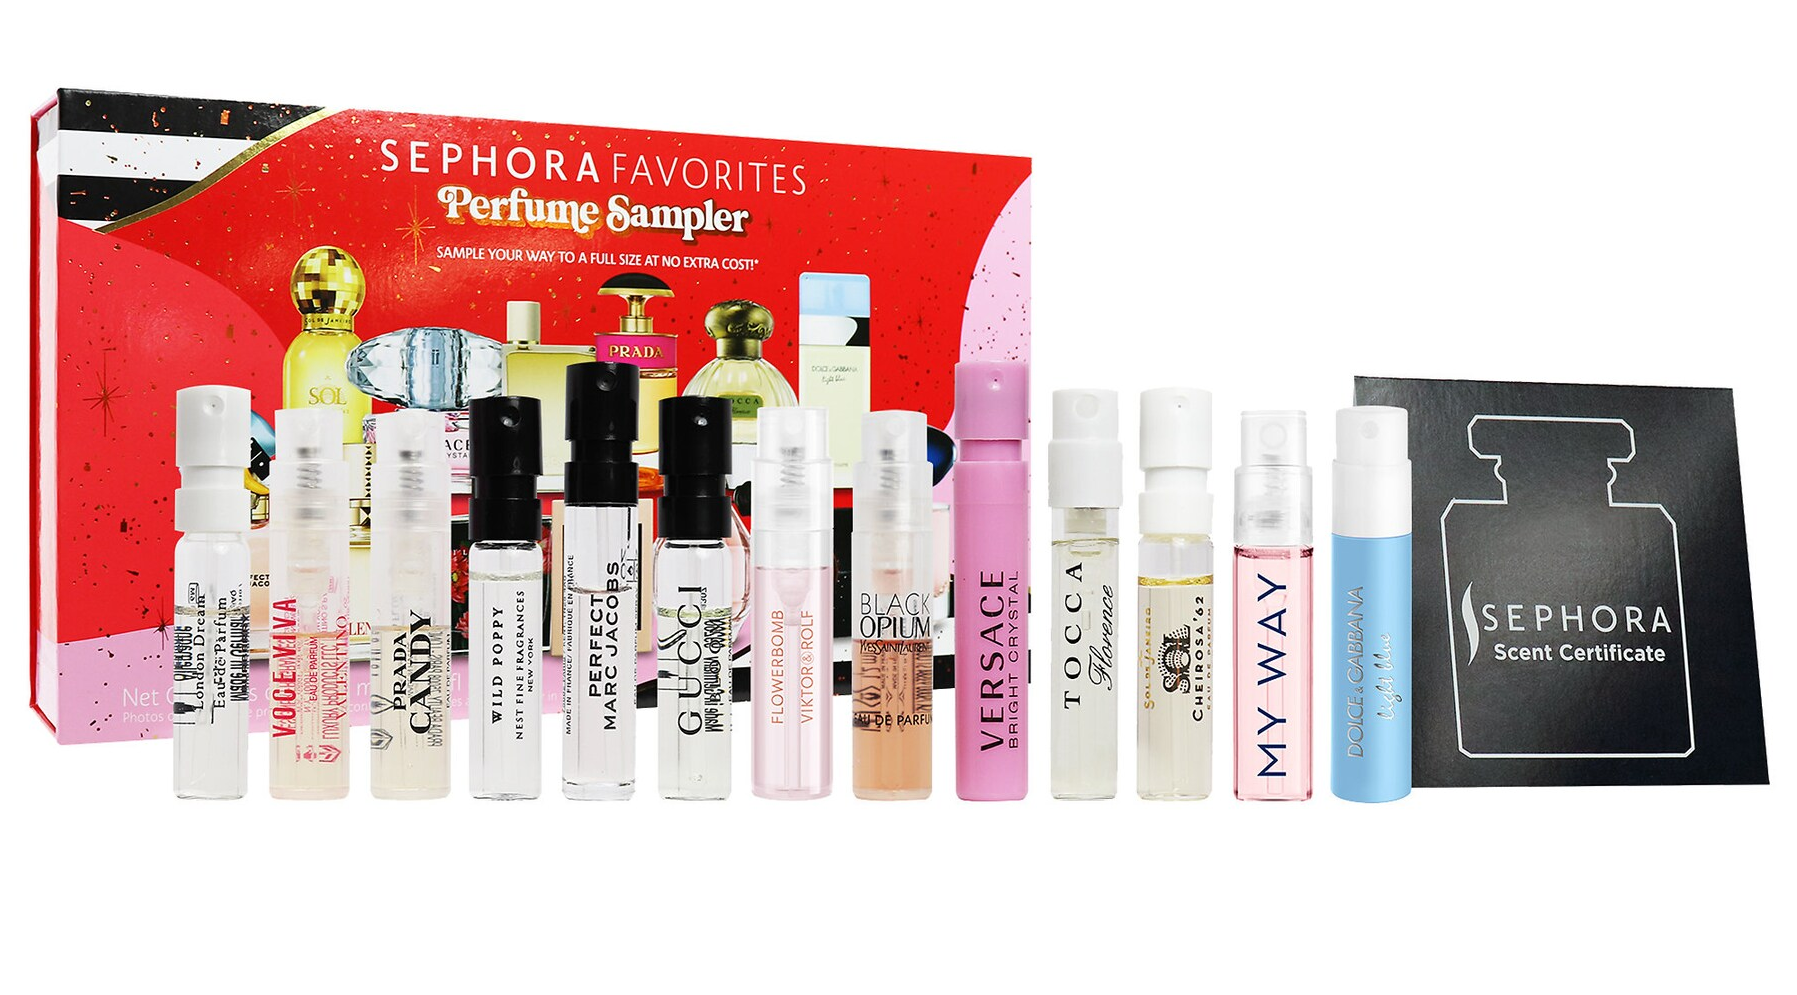 Sephora Favorites Bestsellers Perfume Sampler Set! - Hello Subscription